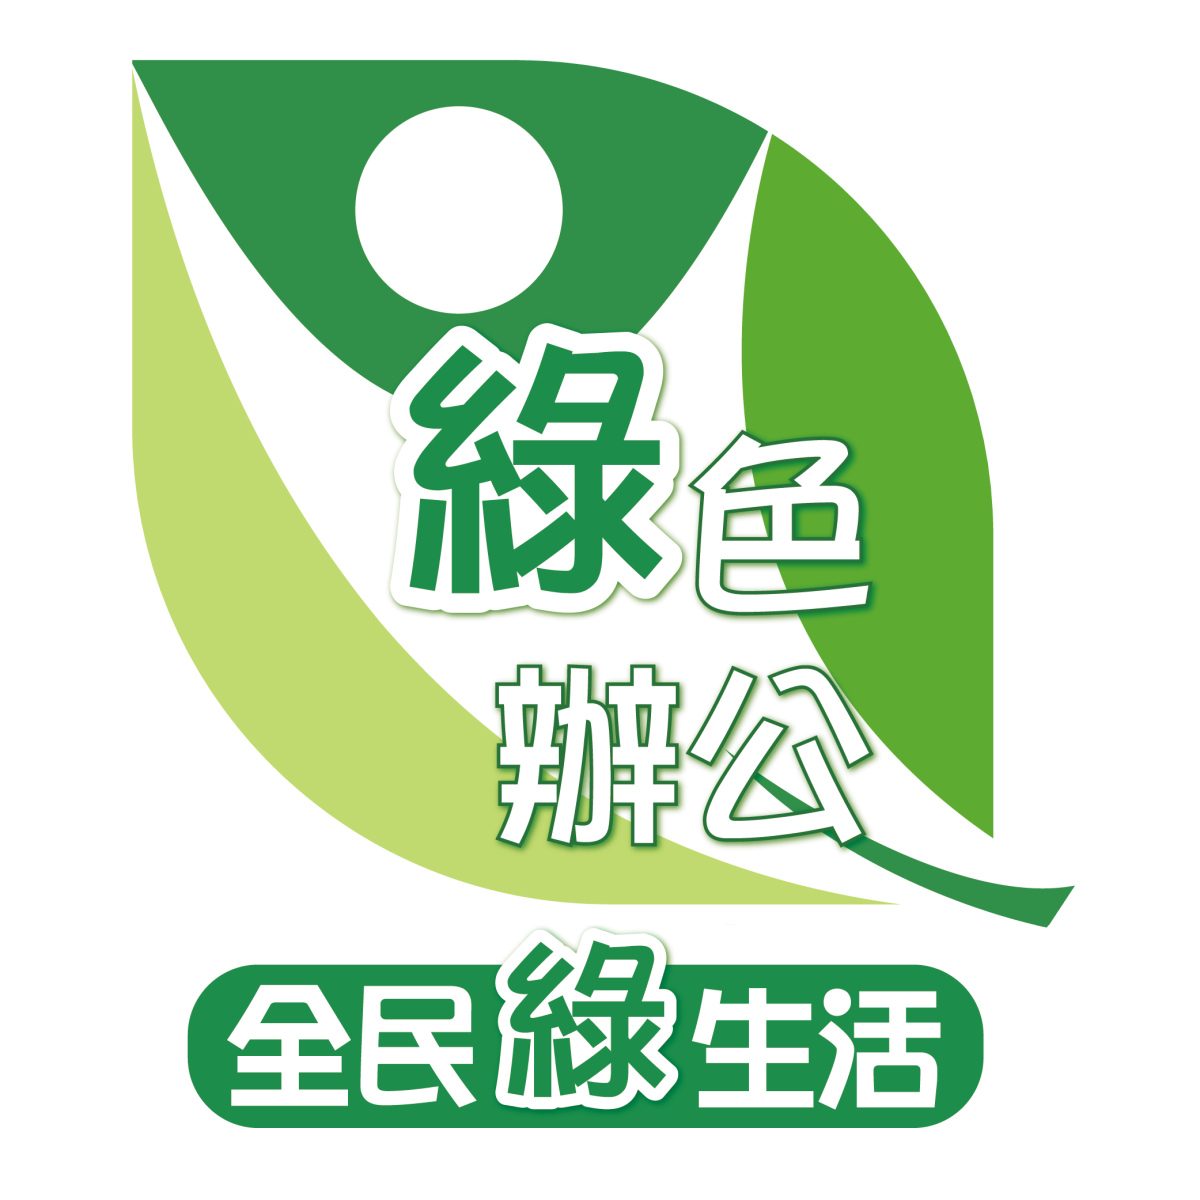 綠色辦公logo